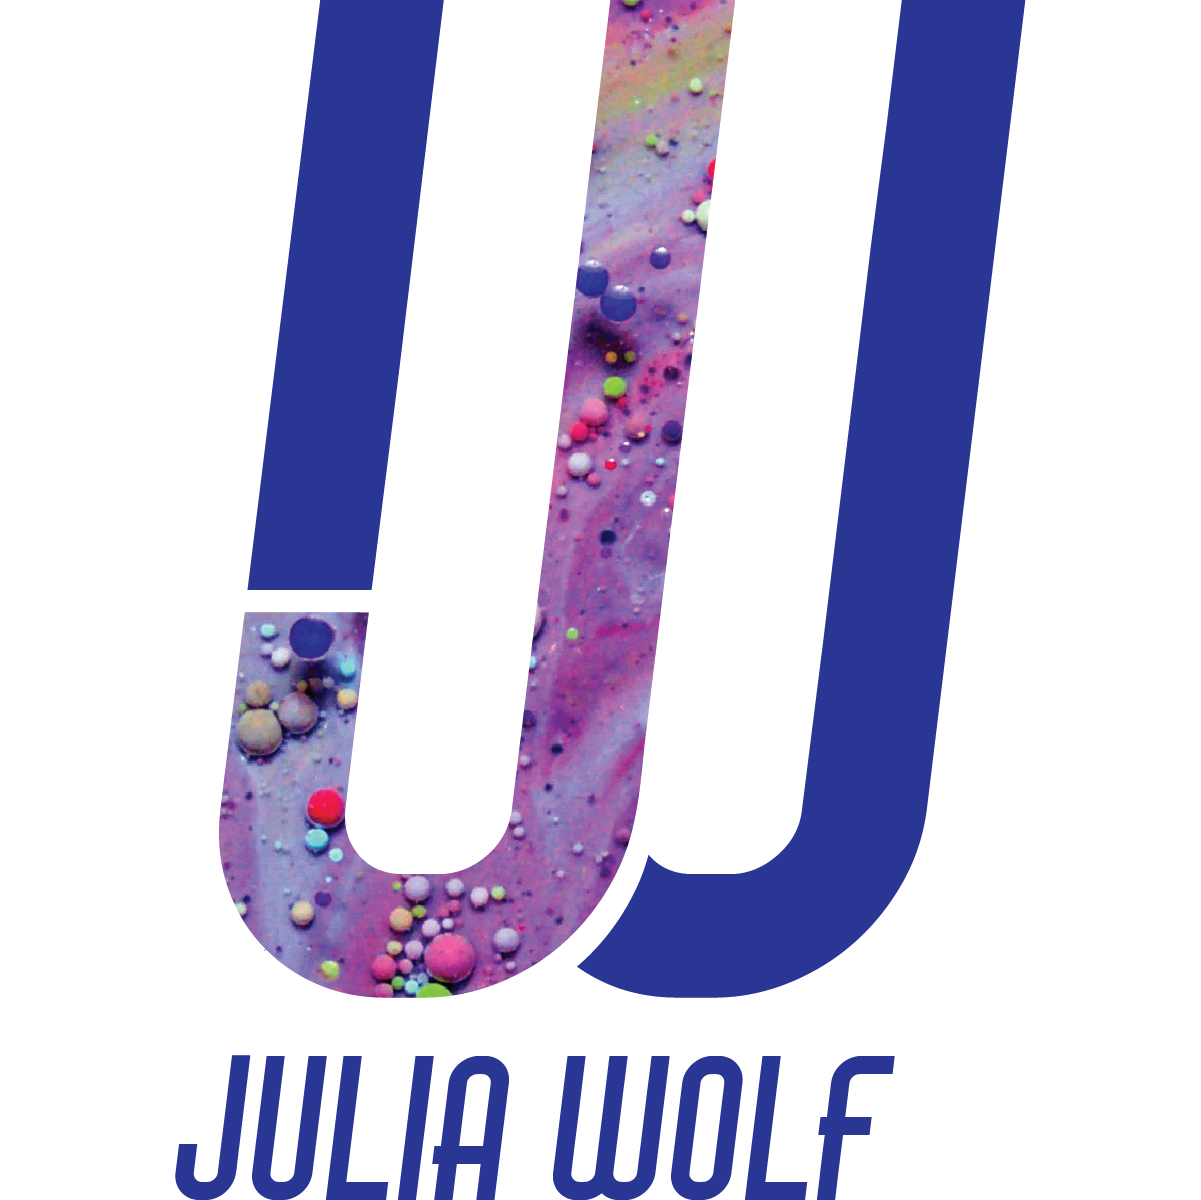 Julia Wolf